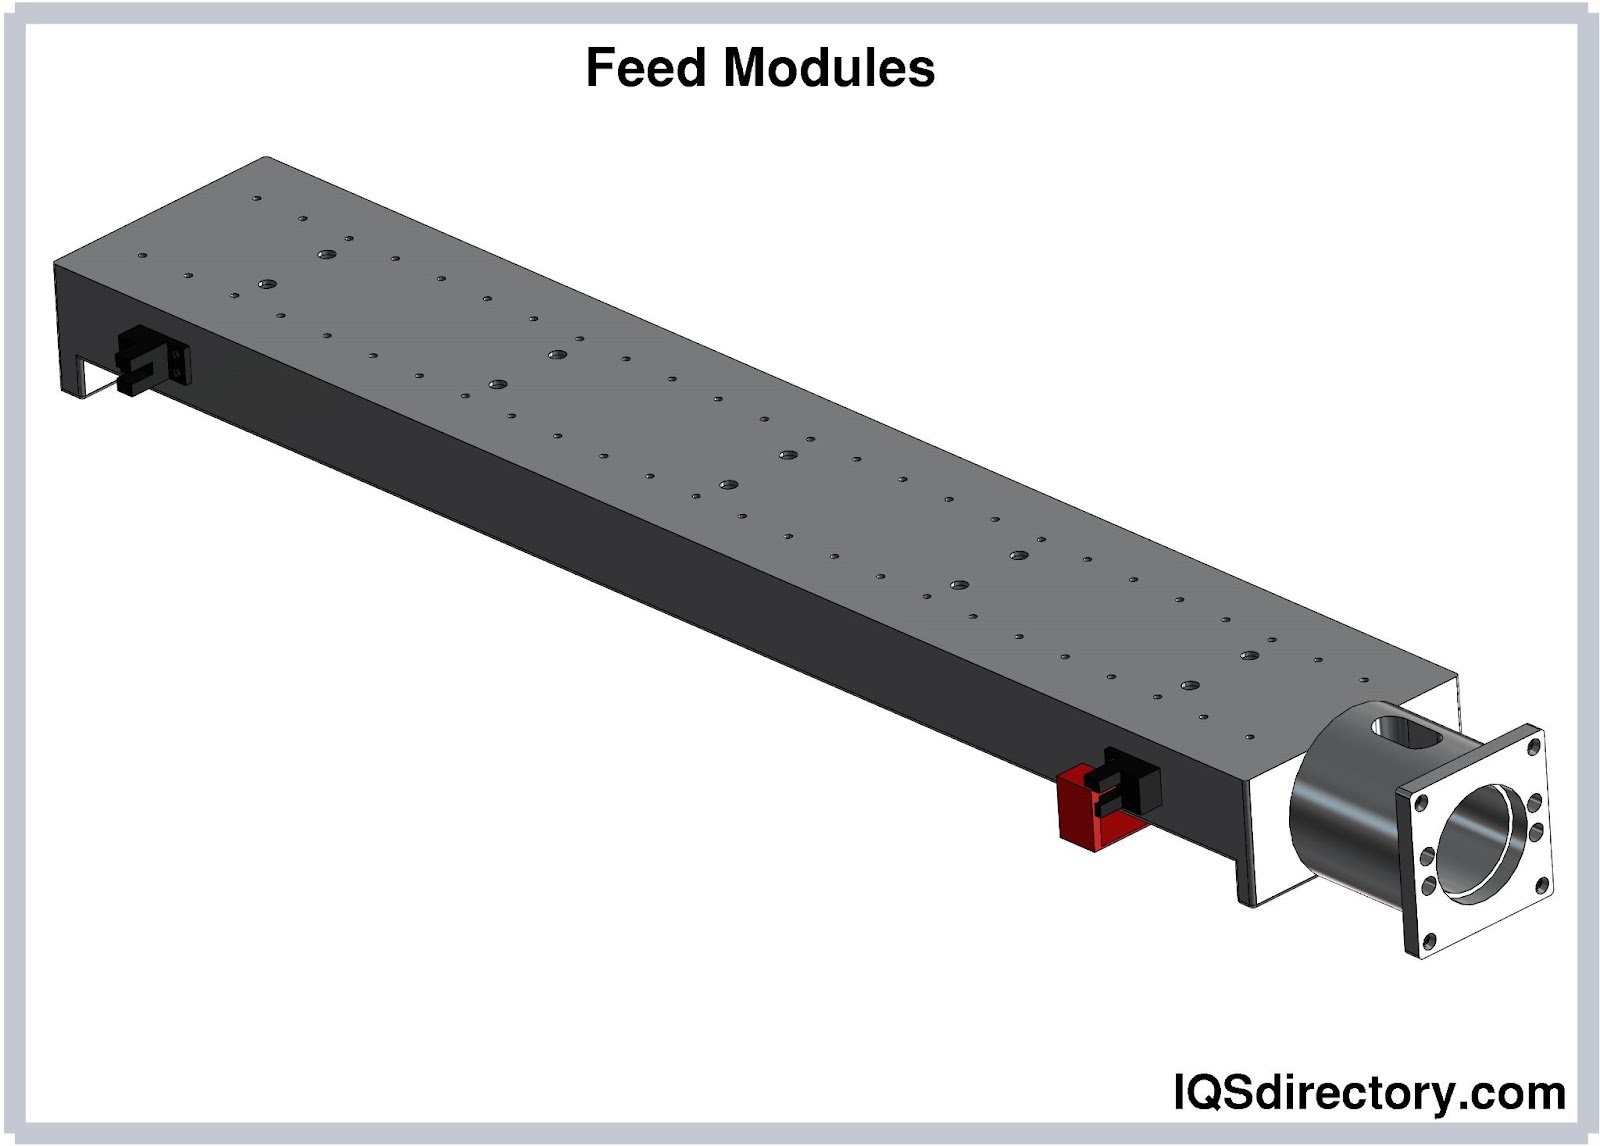  Feed Modules